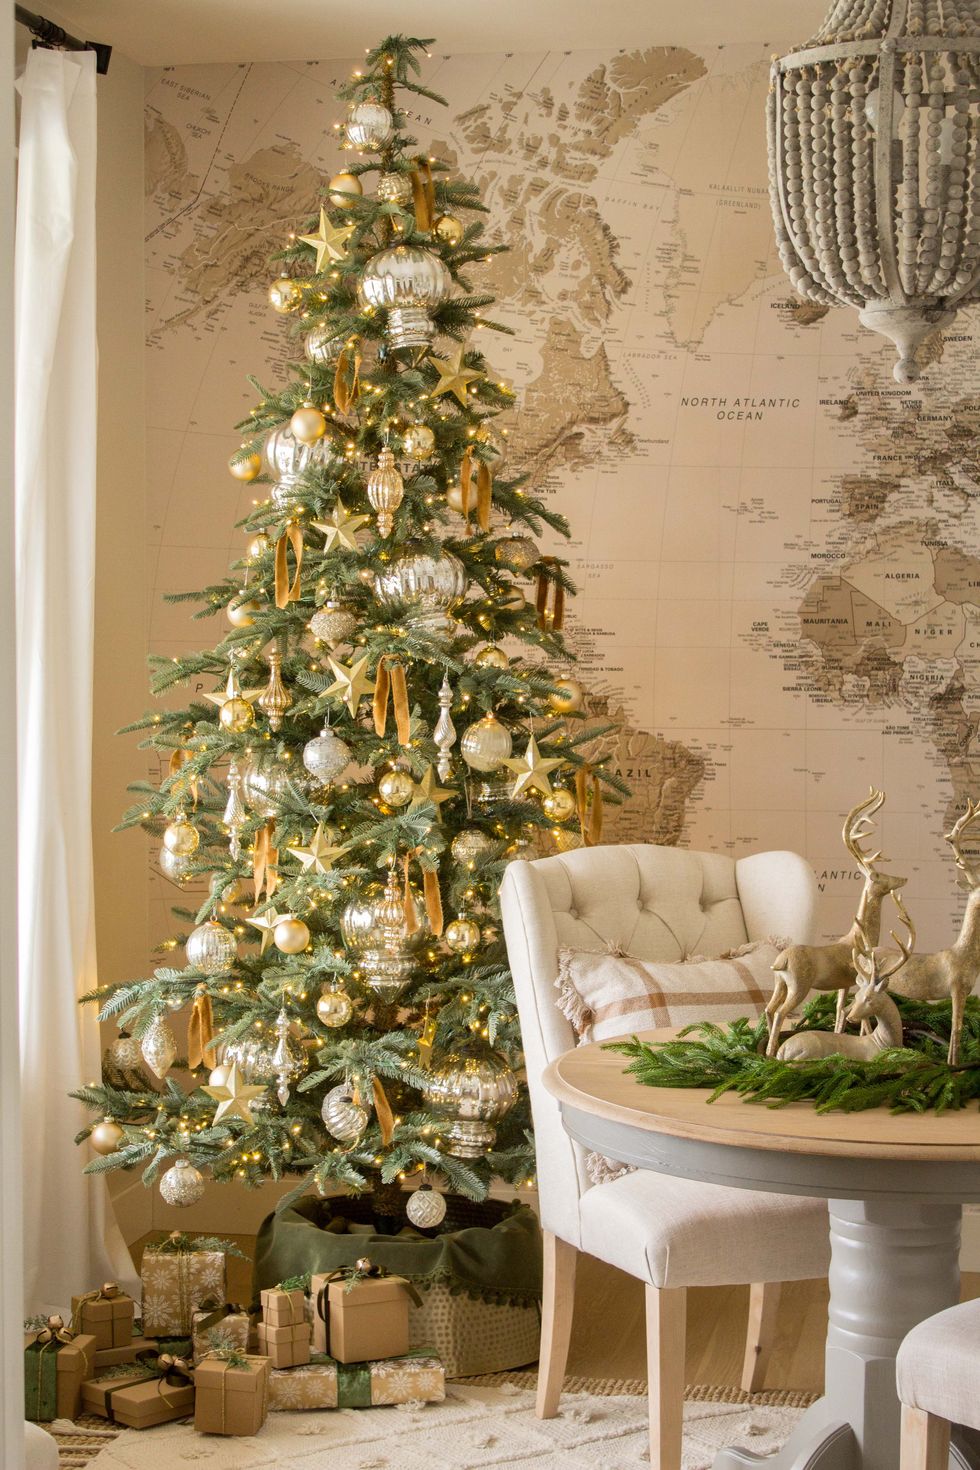 gold christmas tree